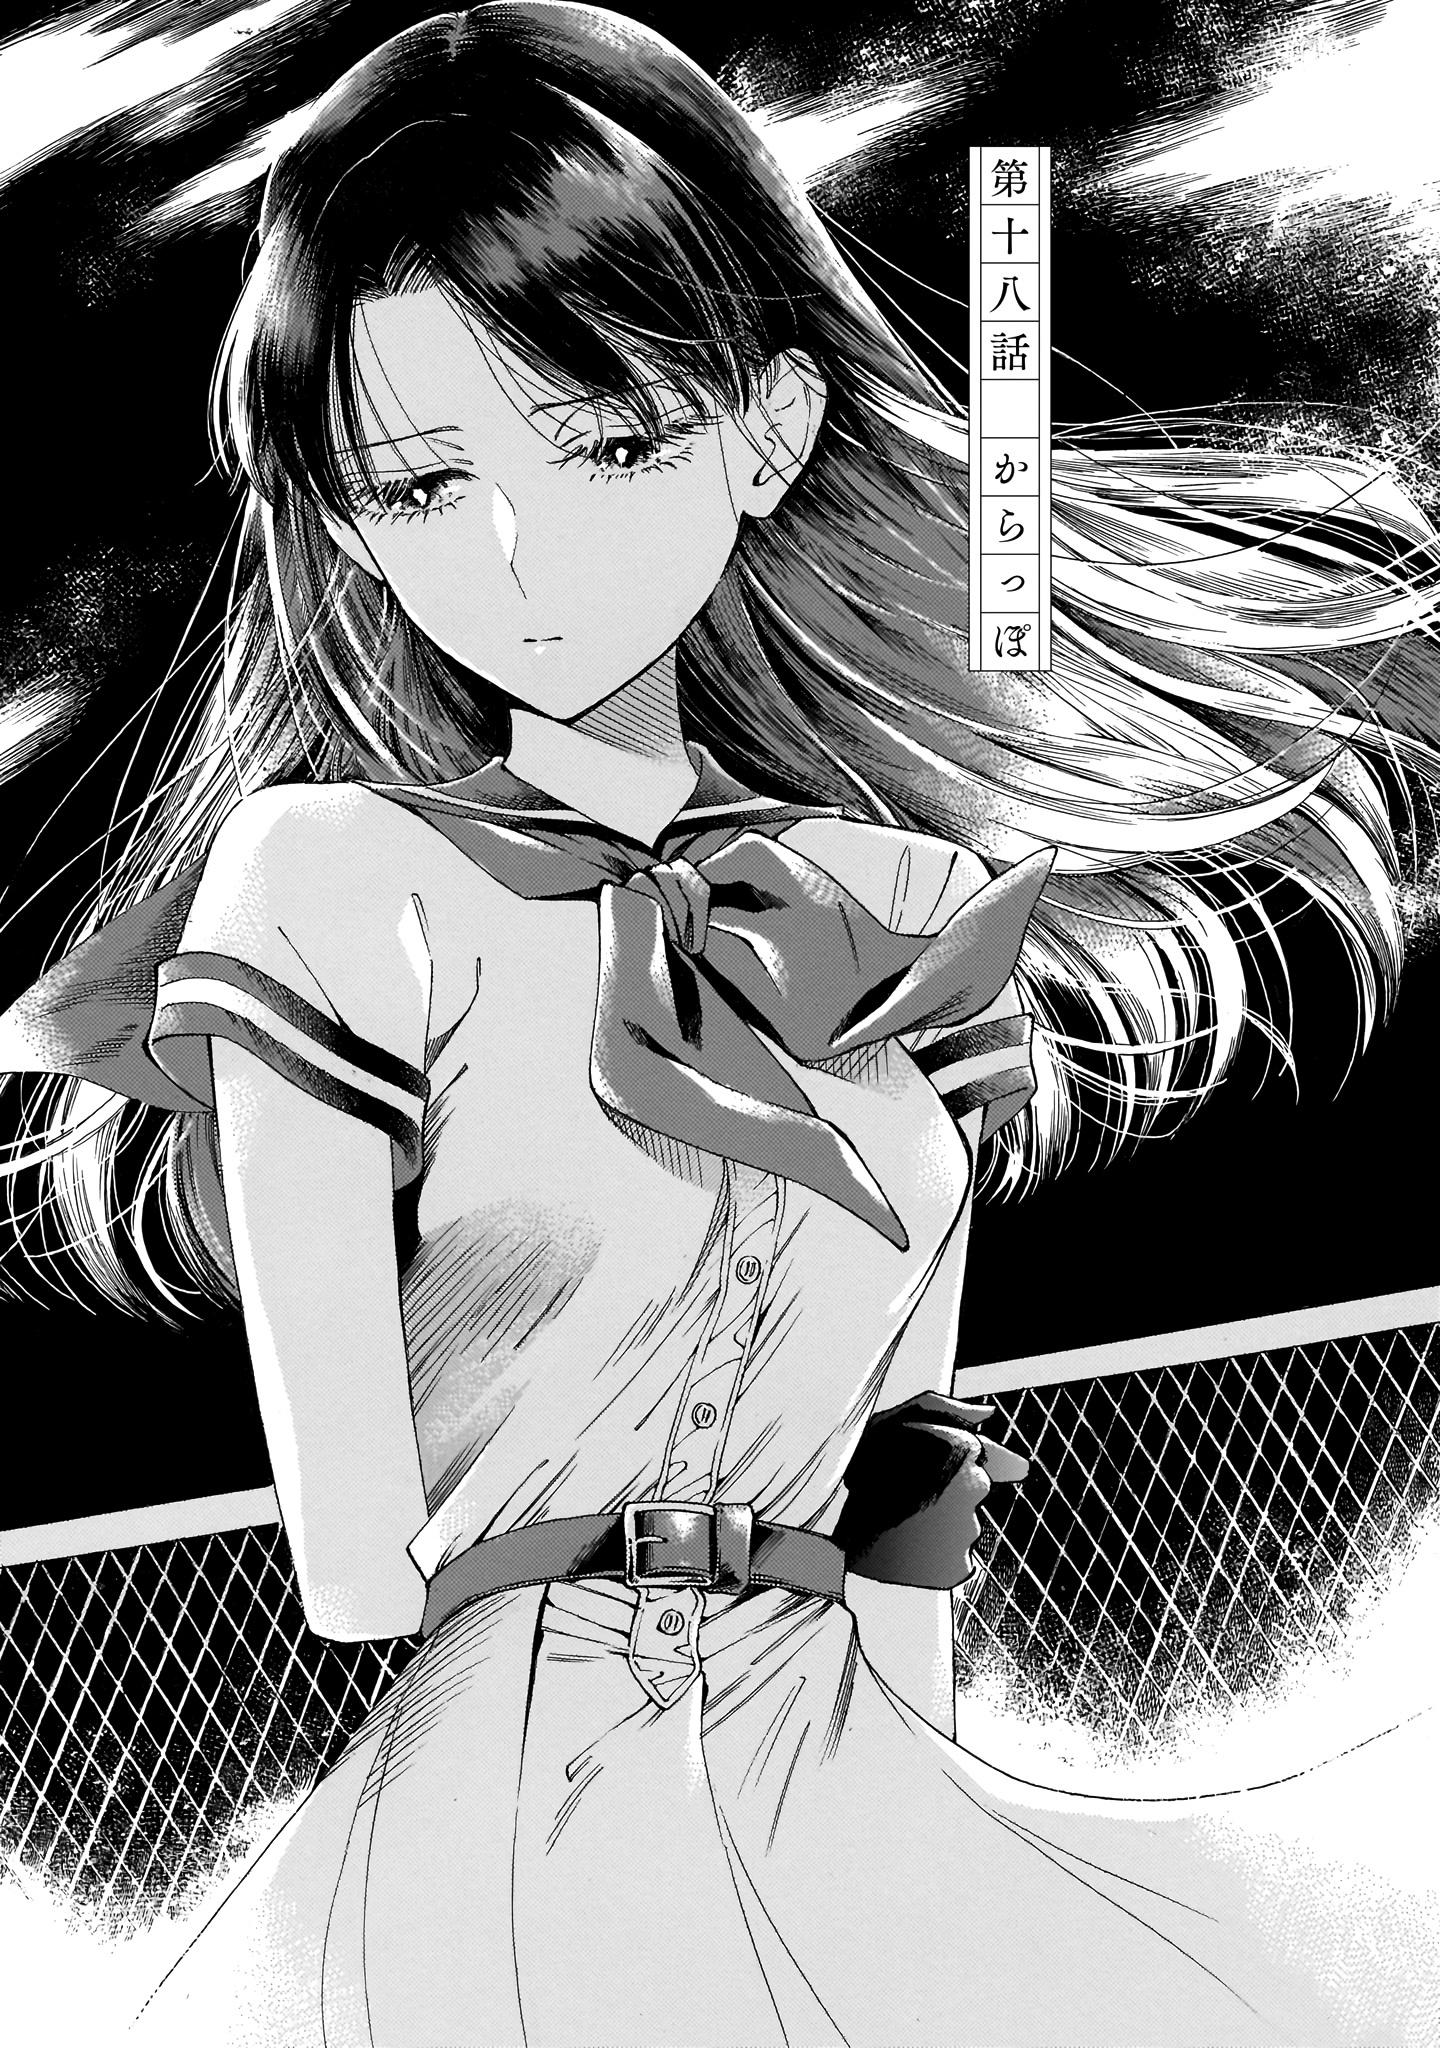 ‎Classroom of the Elite (Manga) Vol. 3